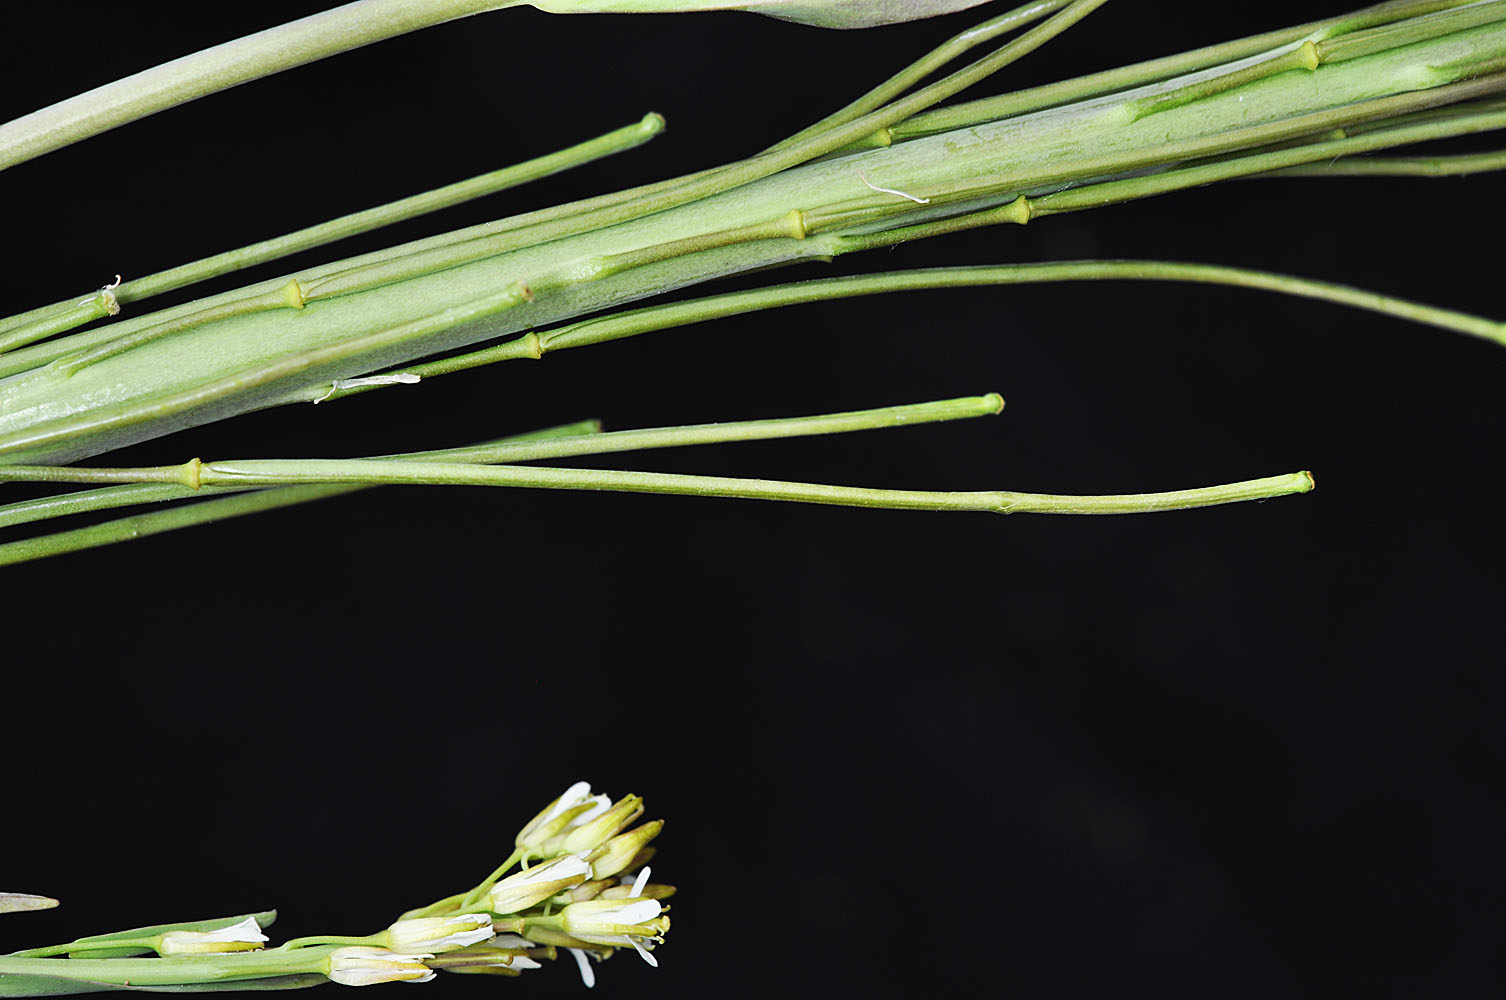 Flora of Eastern Washington Image: Turritis glabra